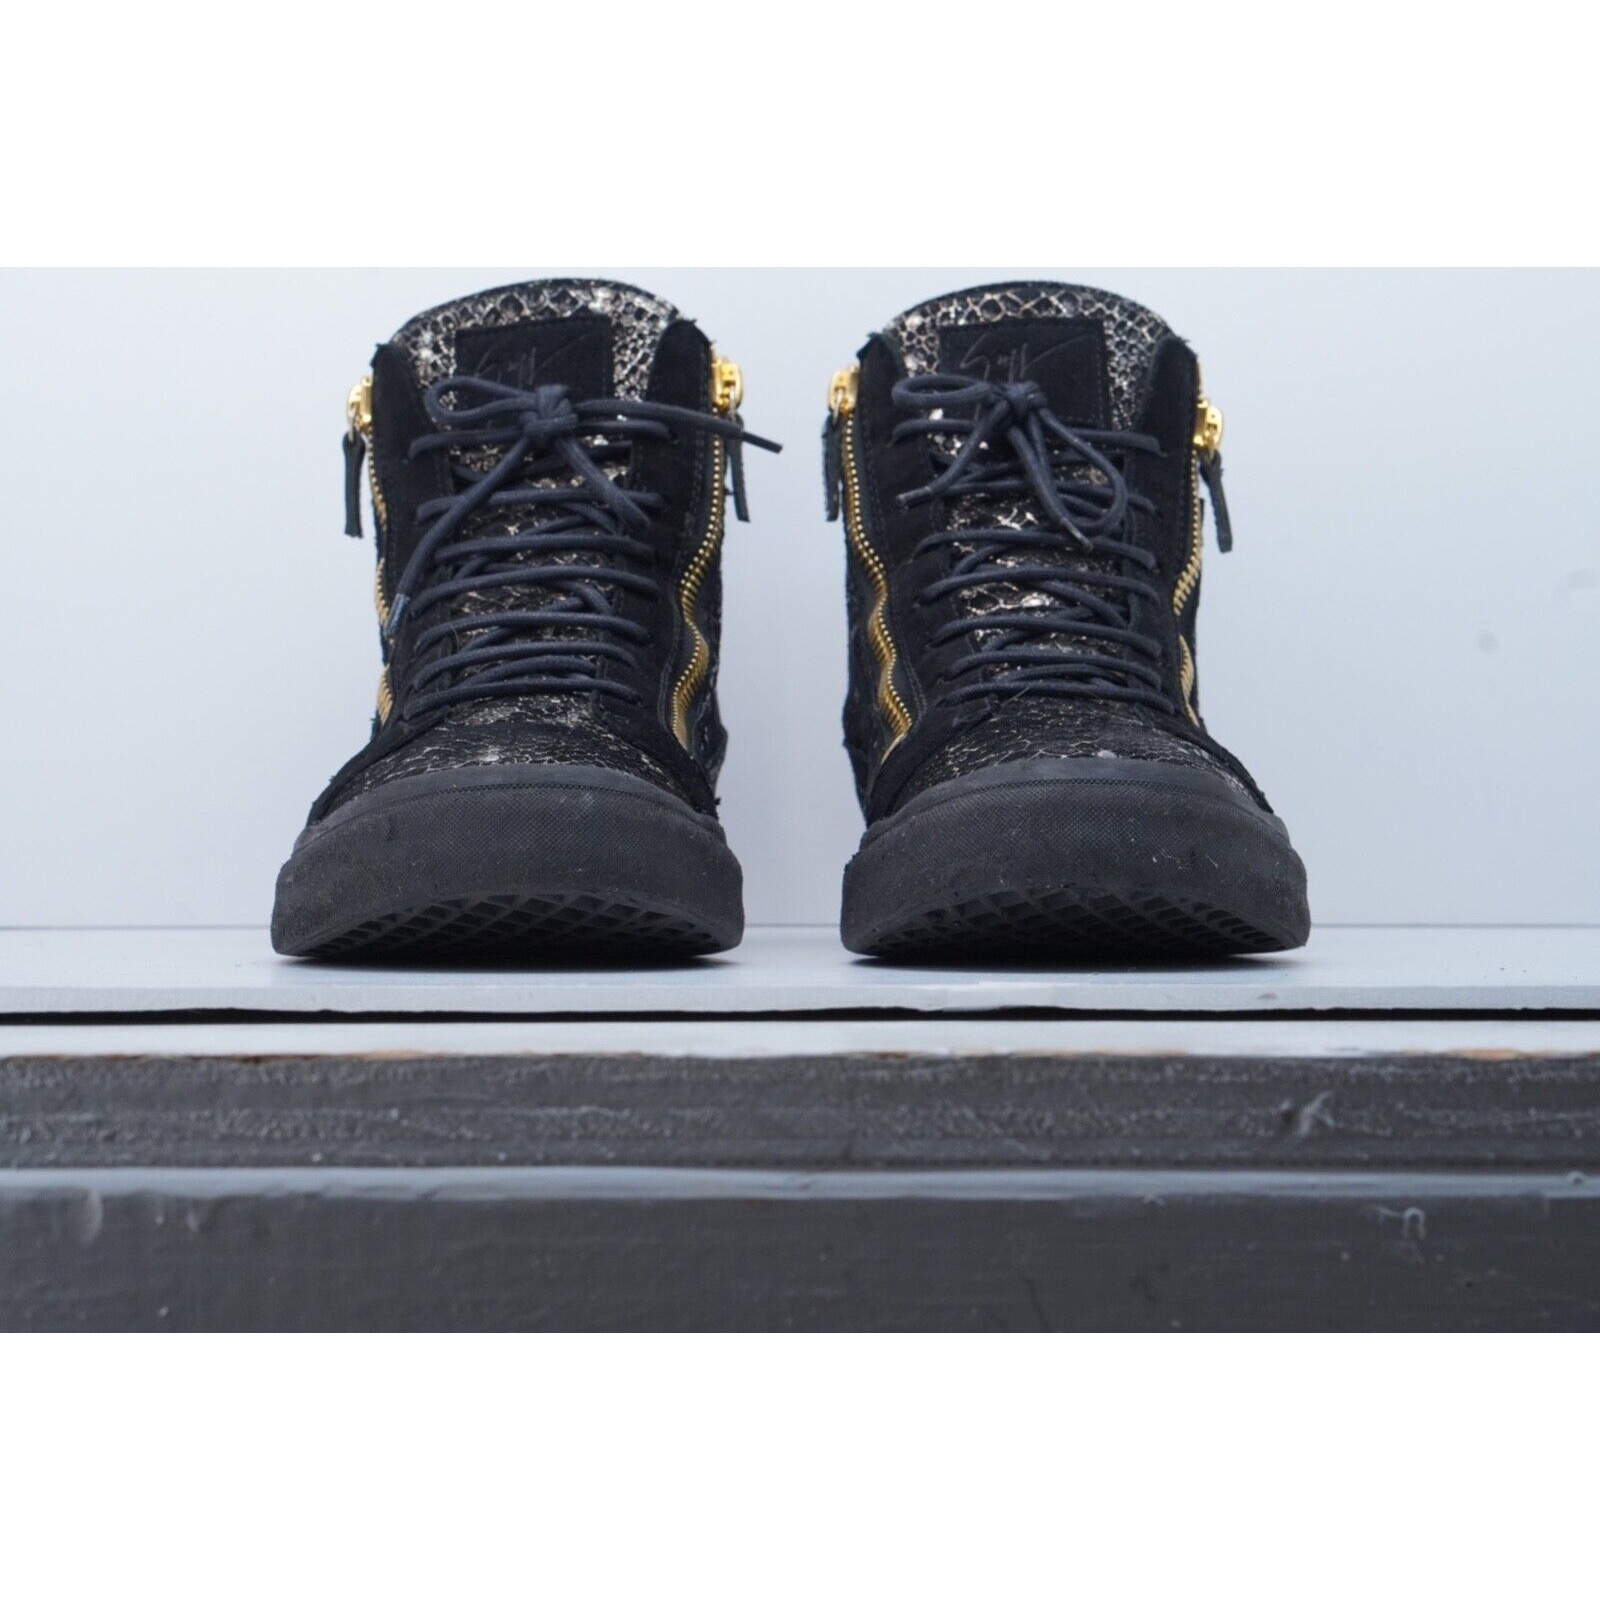 Giuseppe Zanotti Sneaker Boot Black Gold Snakeskin Double Zi - 3